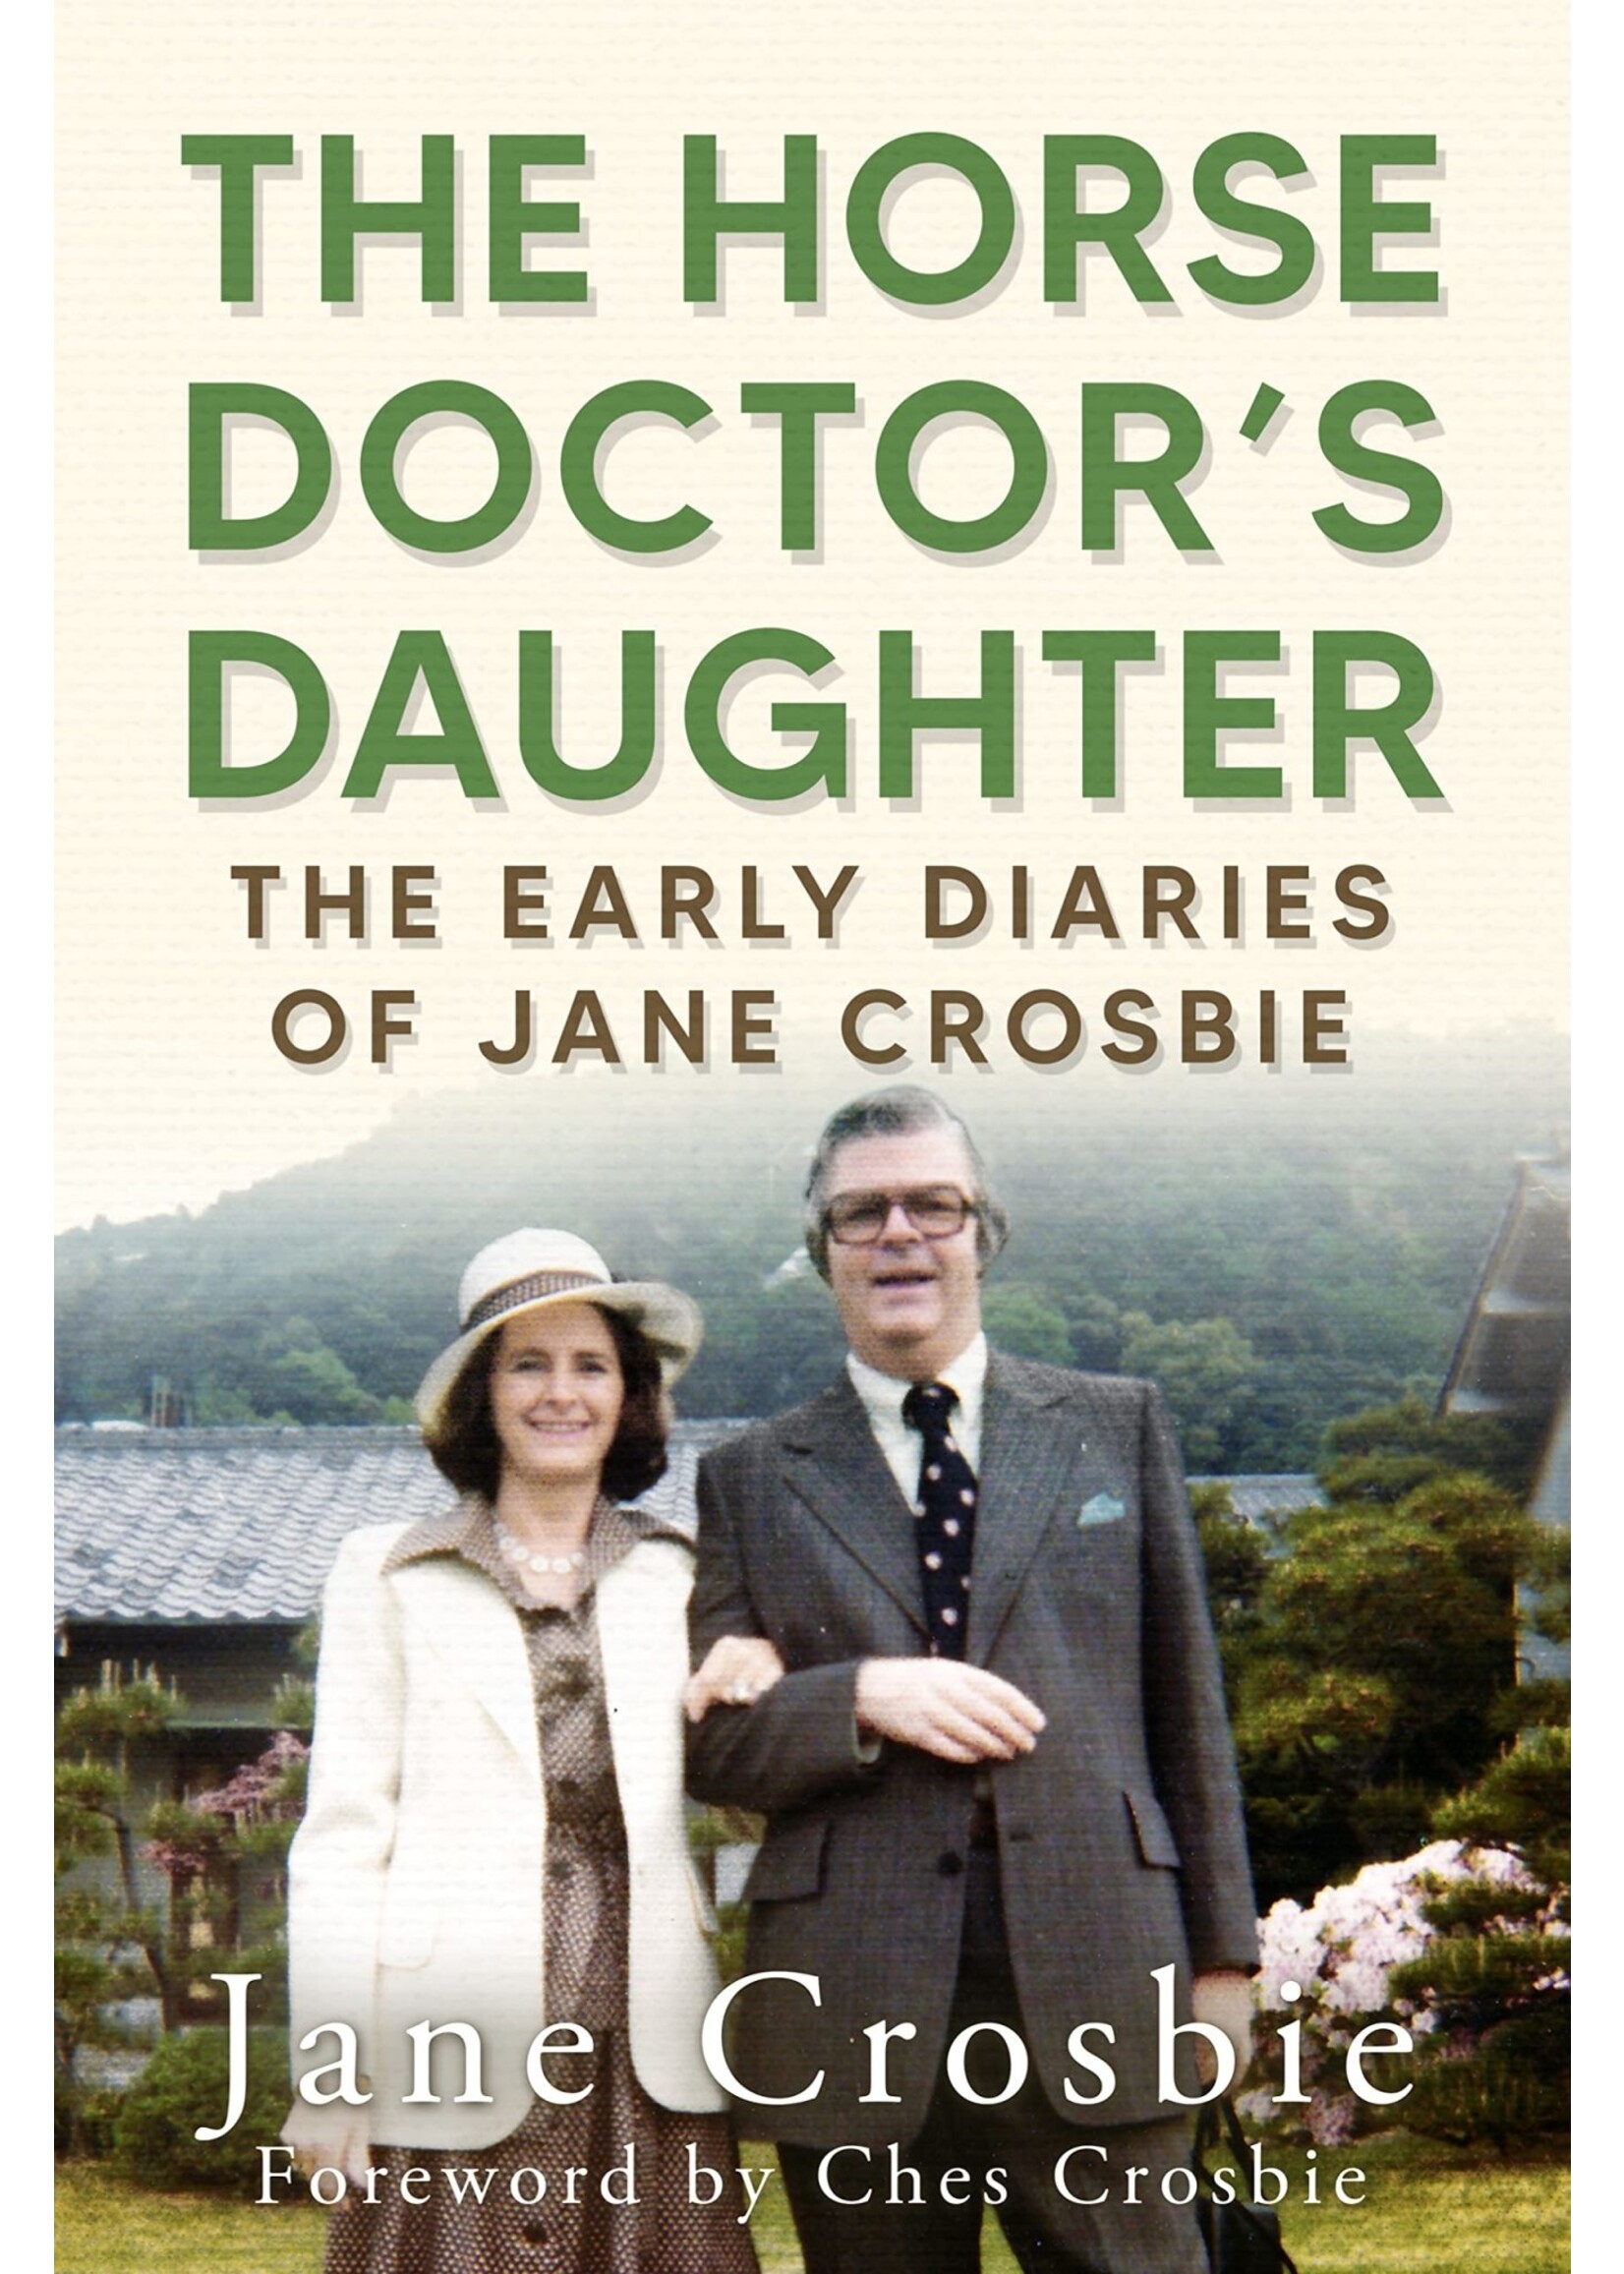 The Horse Doctor's Daughter: The Early Diaries of Jane Crosbie by Jane Crosbie